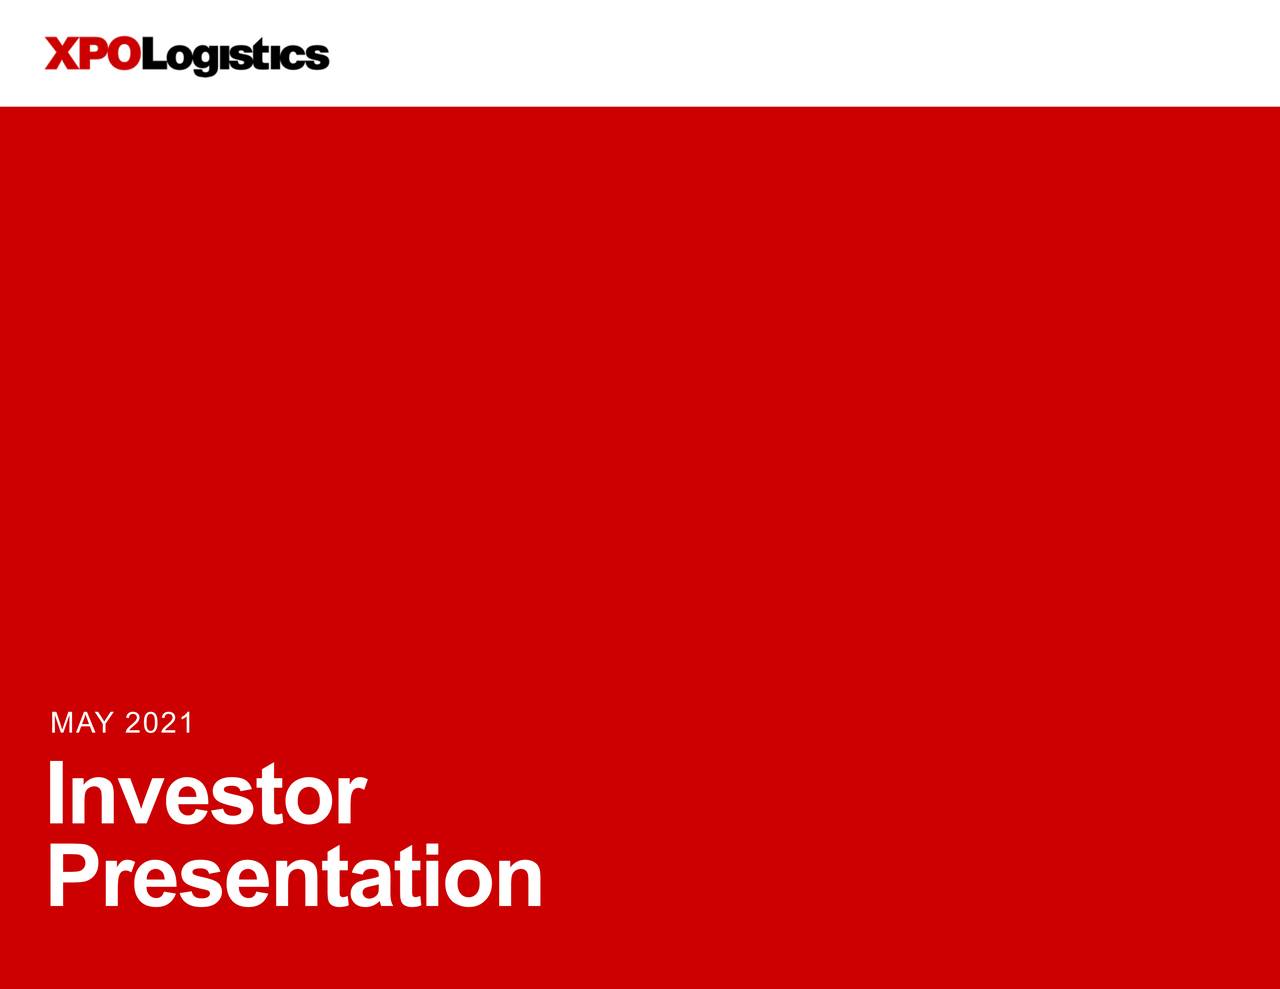 xpo logistics investor presentation